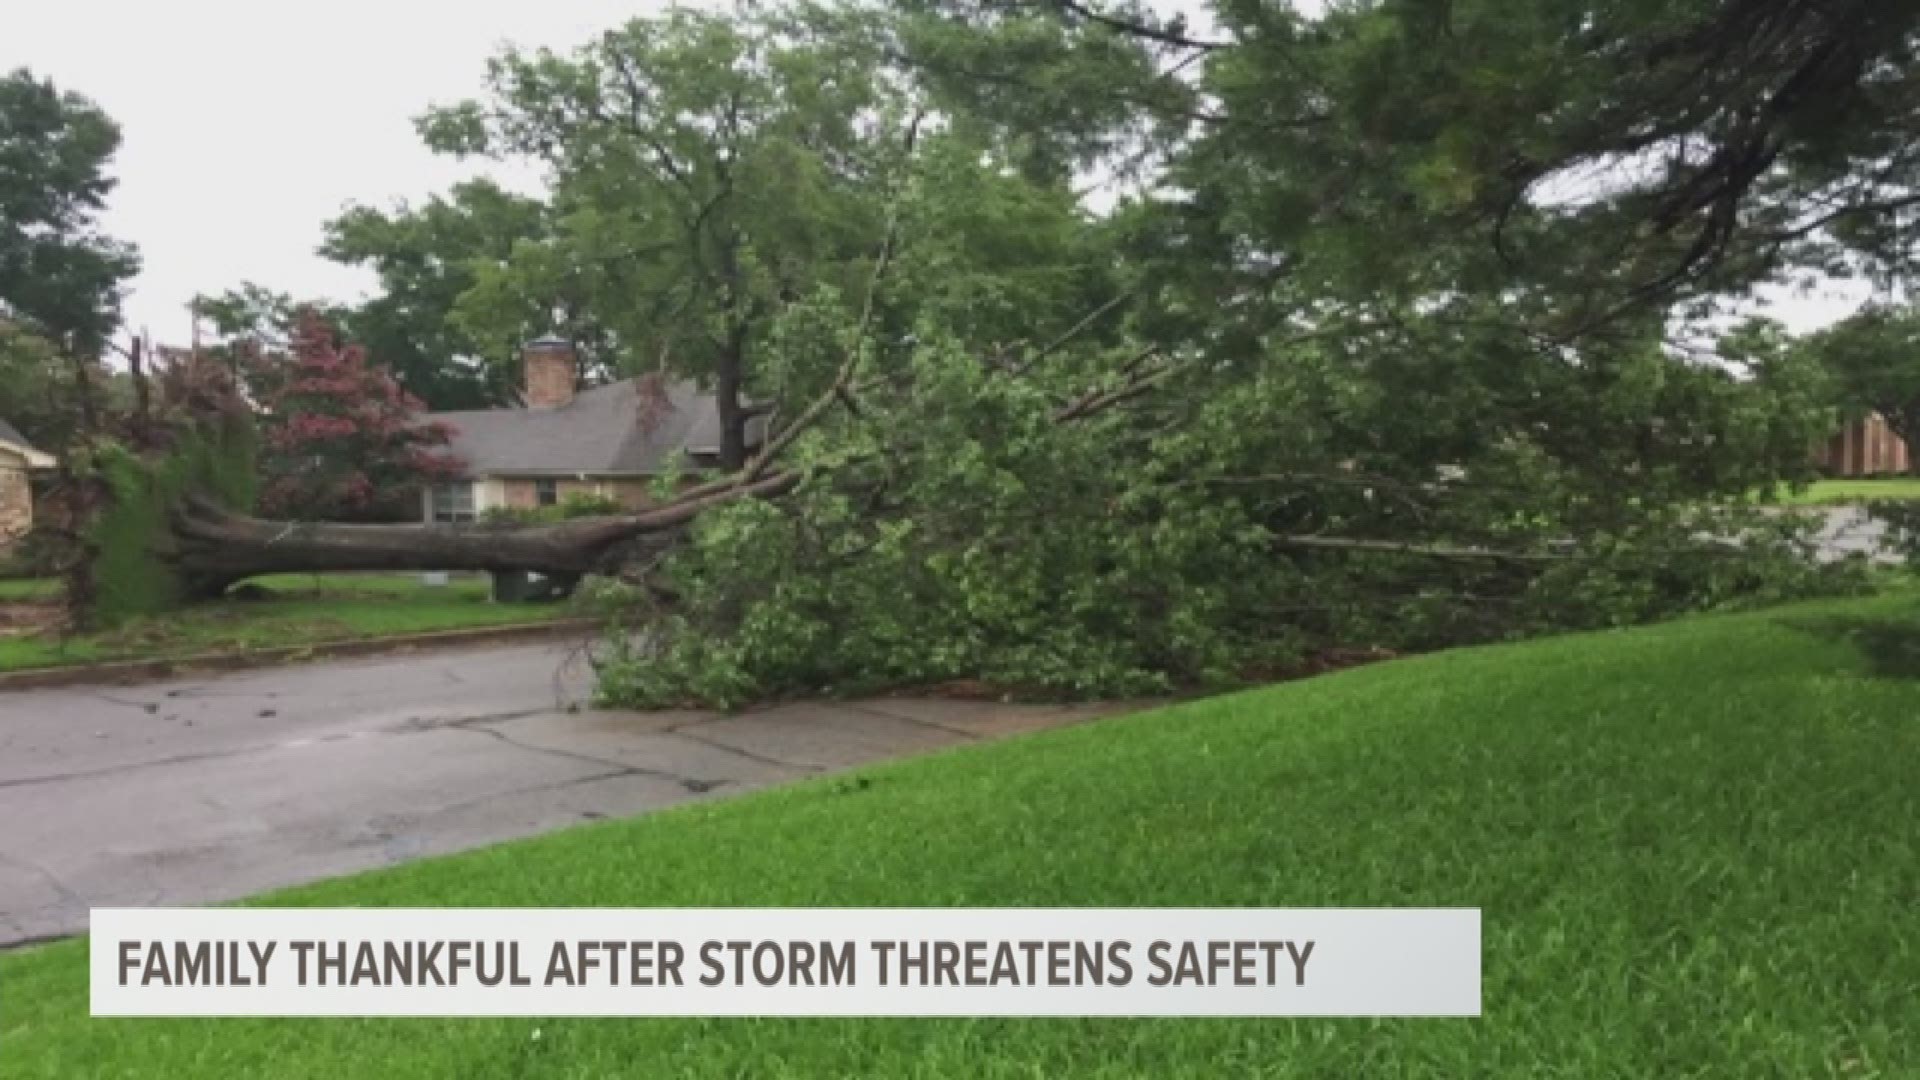 A large oak tree was uprooted by heavy winds, left blocking a neighborhood street.